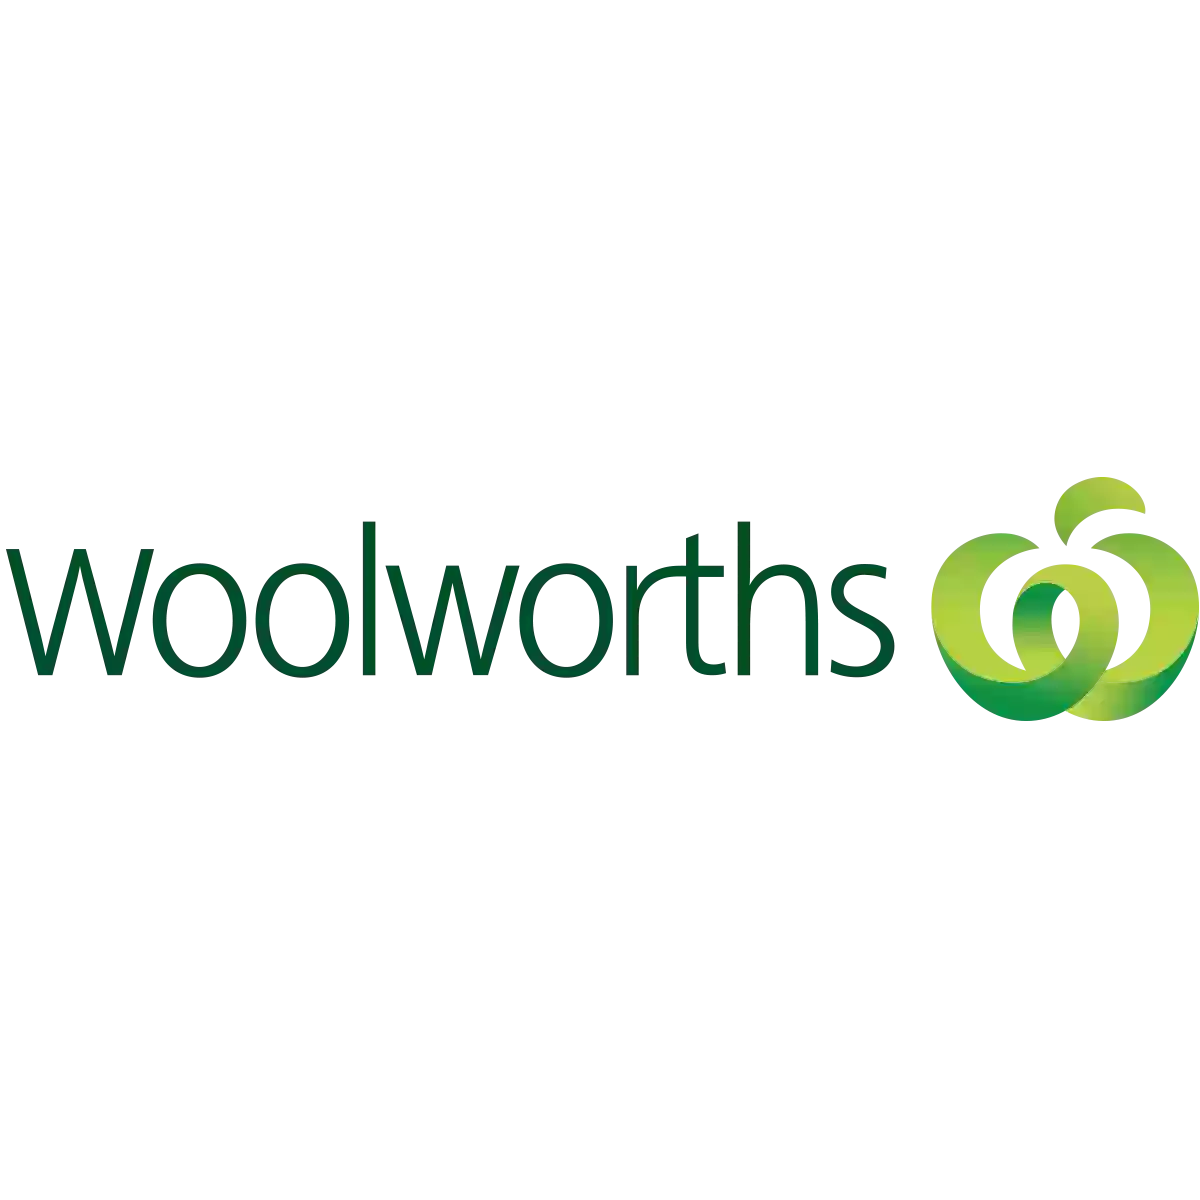 Woolworths Banksia Grove